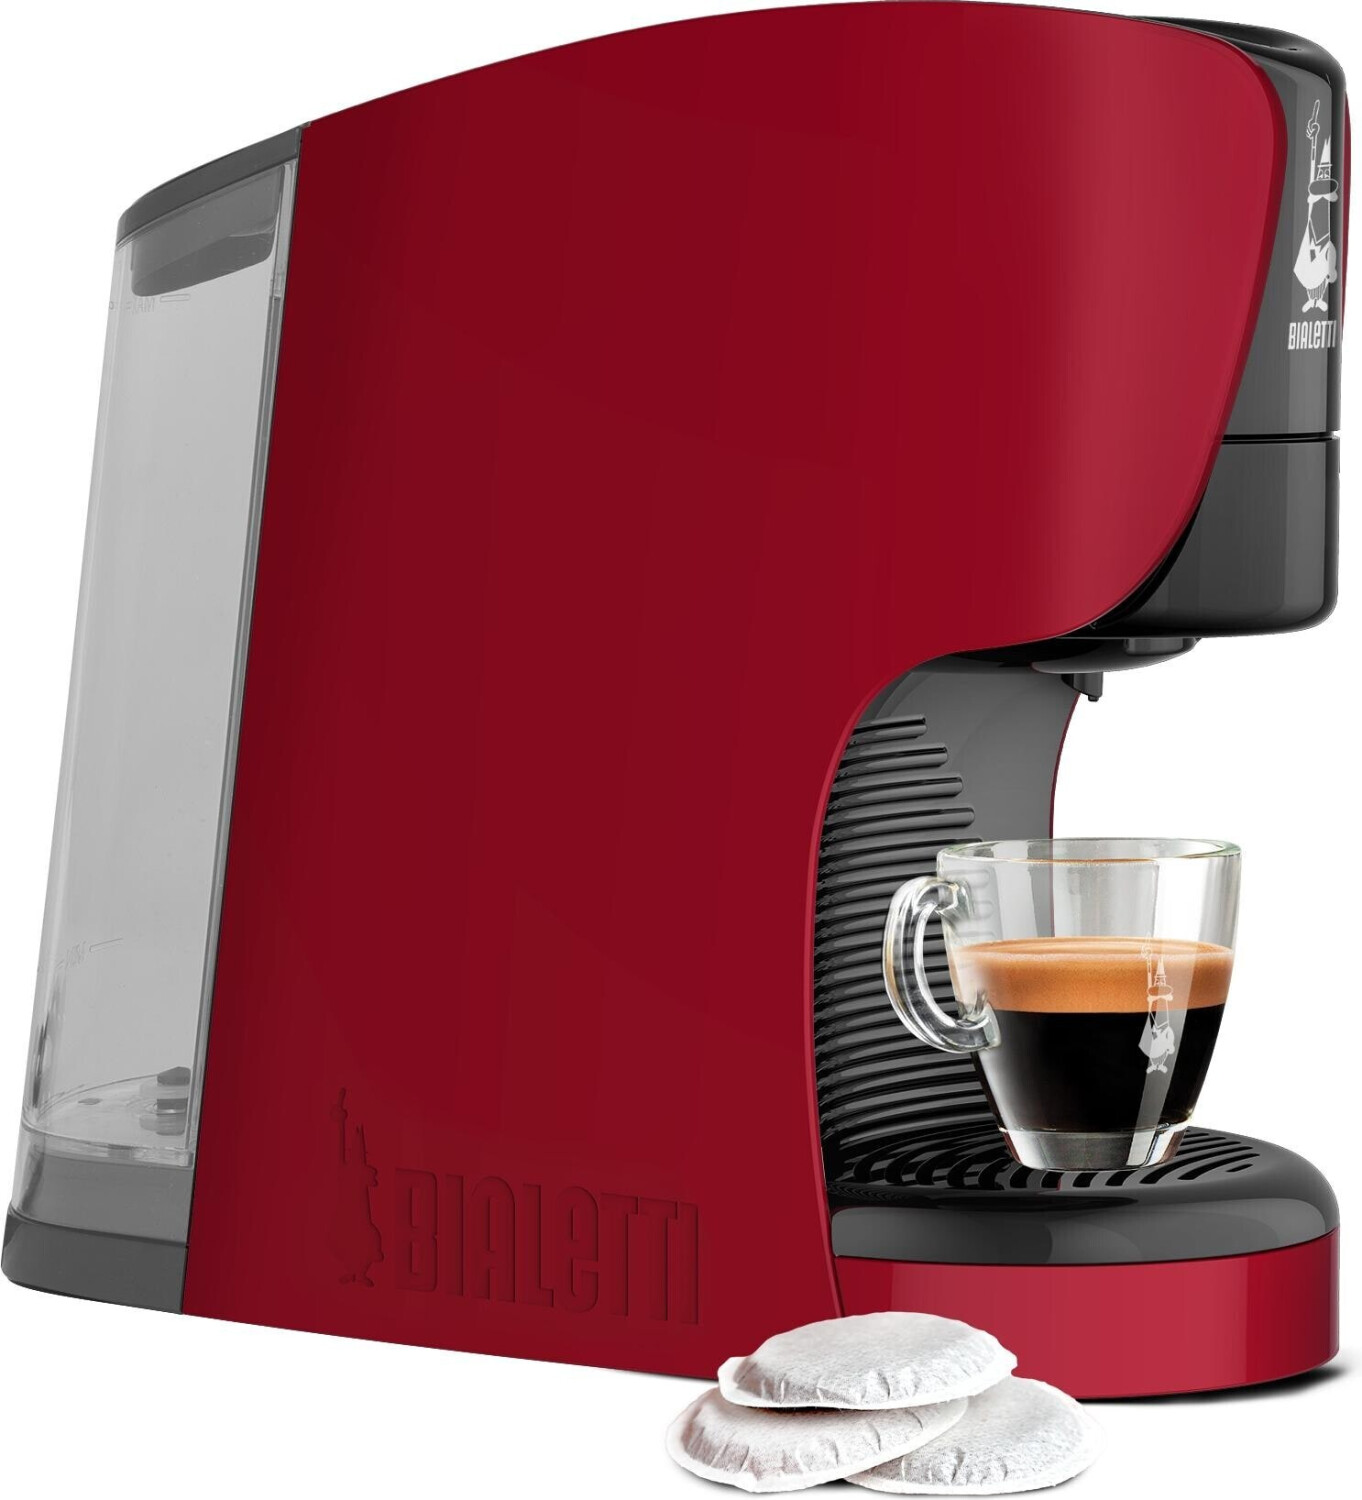 https://cdn.idealo.com/folder/Product/203515/9/203515923/s10_produktbild_max/bialetti-dama-macchina-caffe-espresso-cialde-ese.jpg